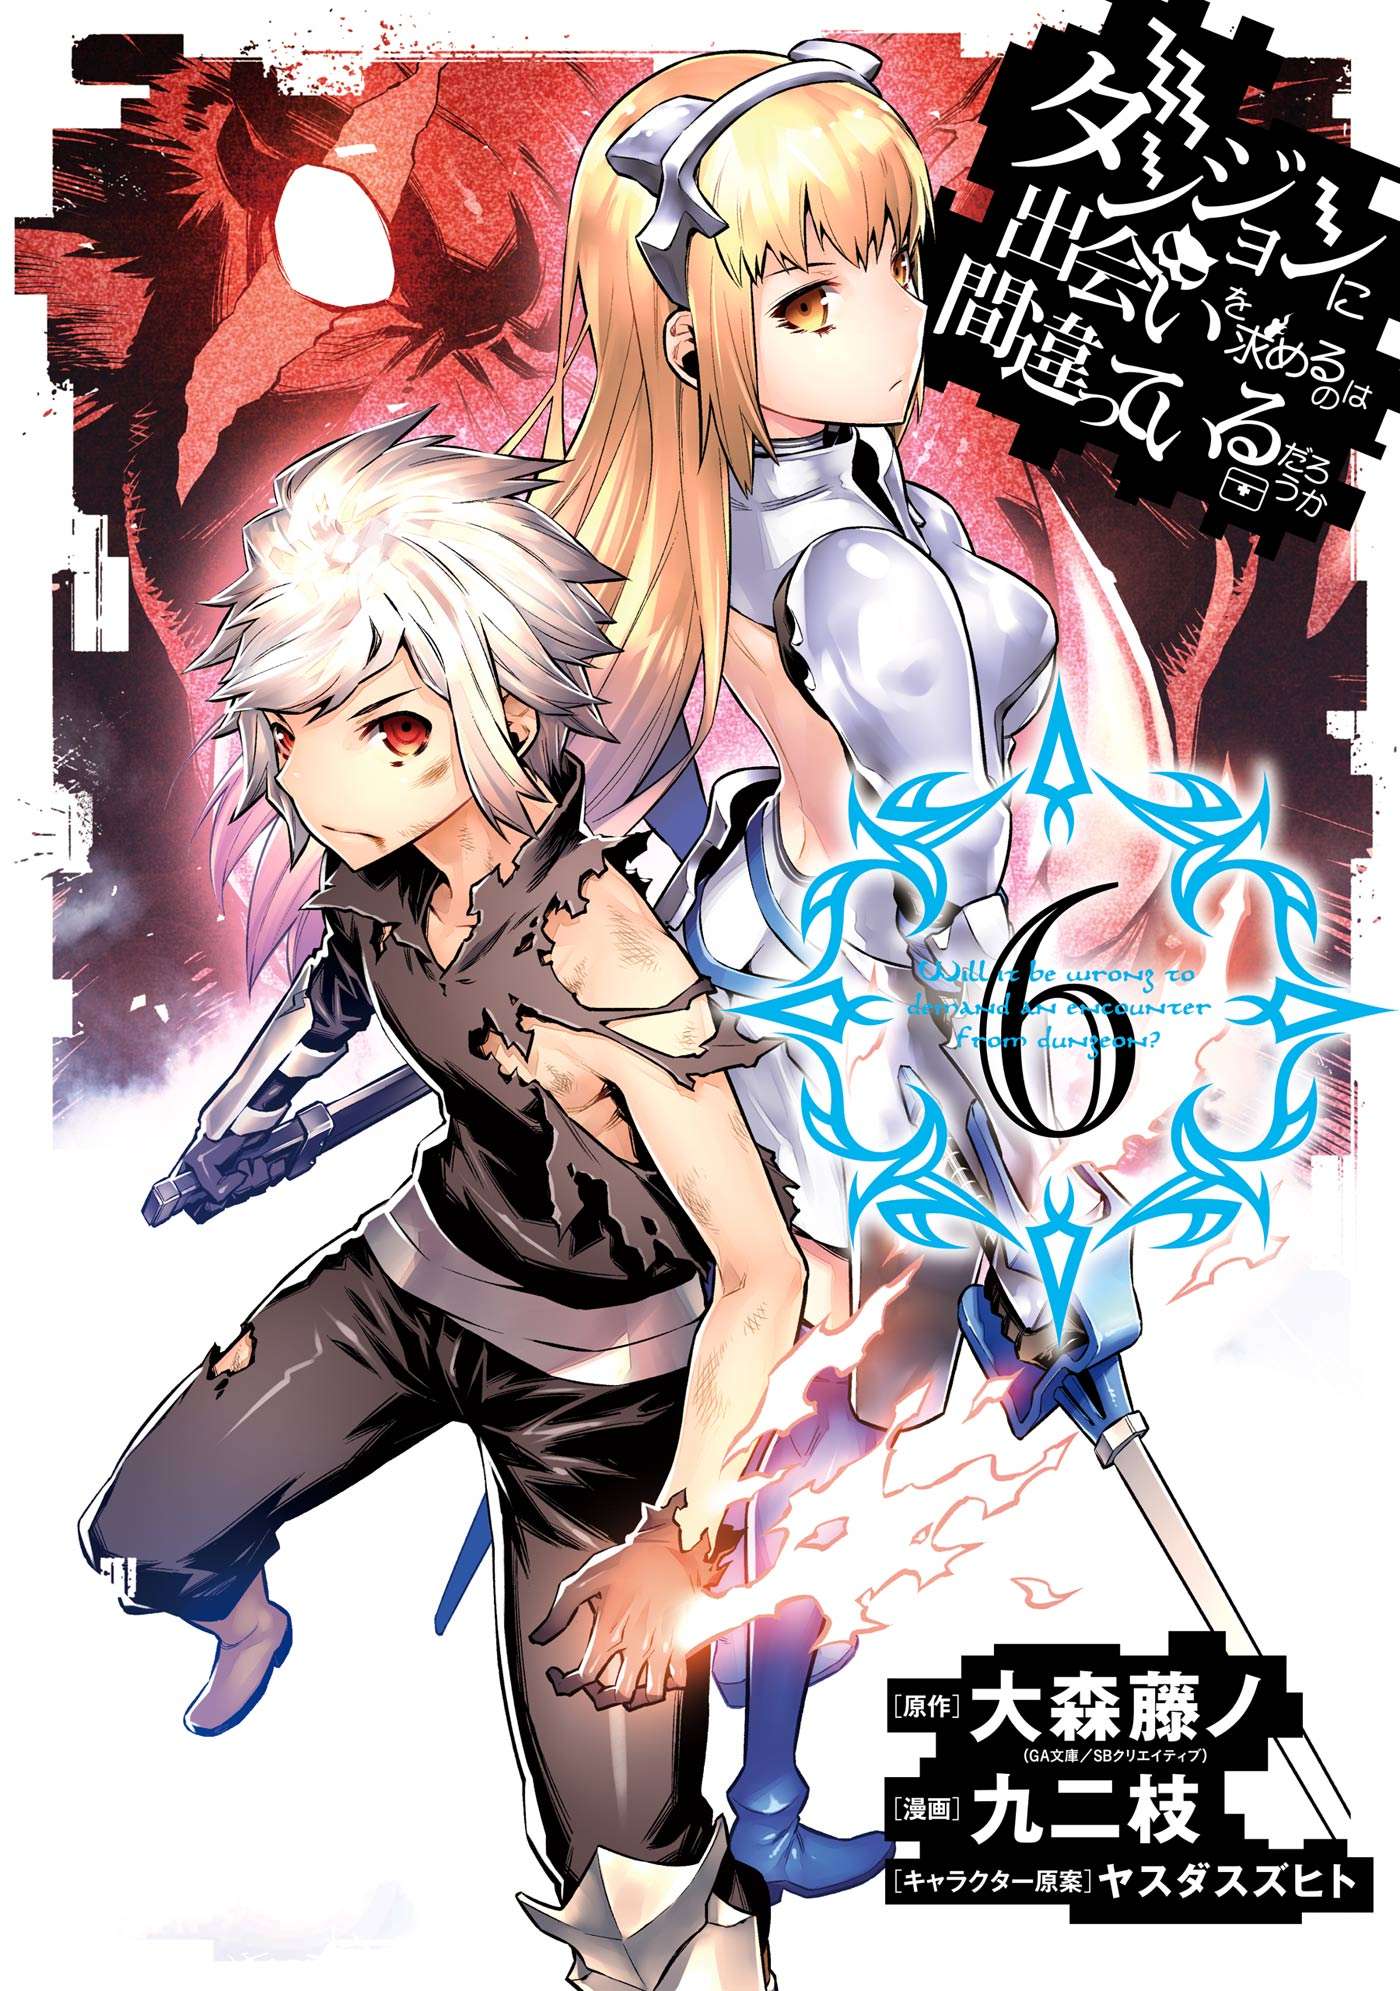 DanMachi Manga Volume 5, DanMachi Wiki